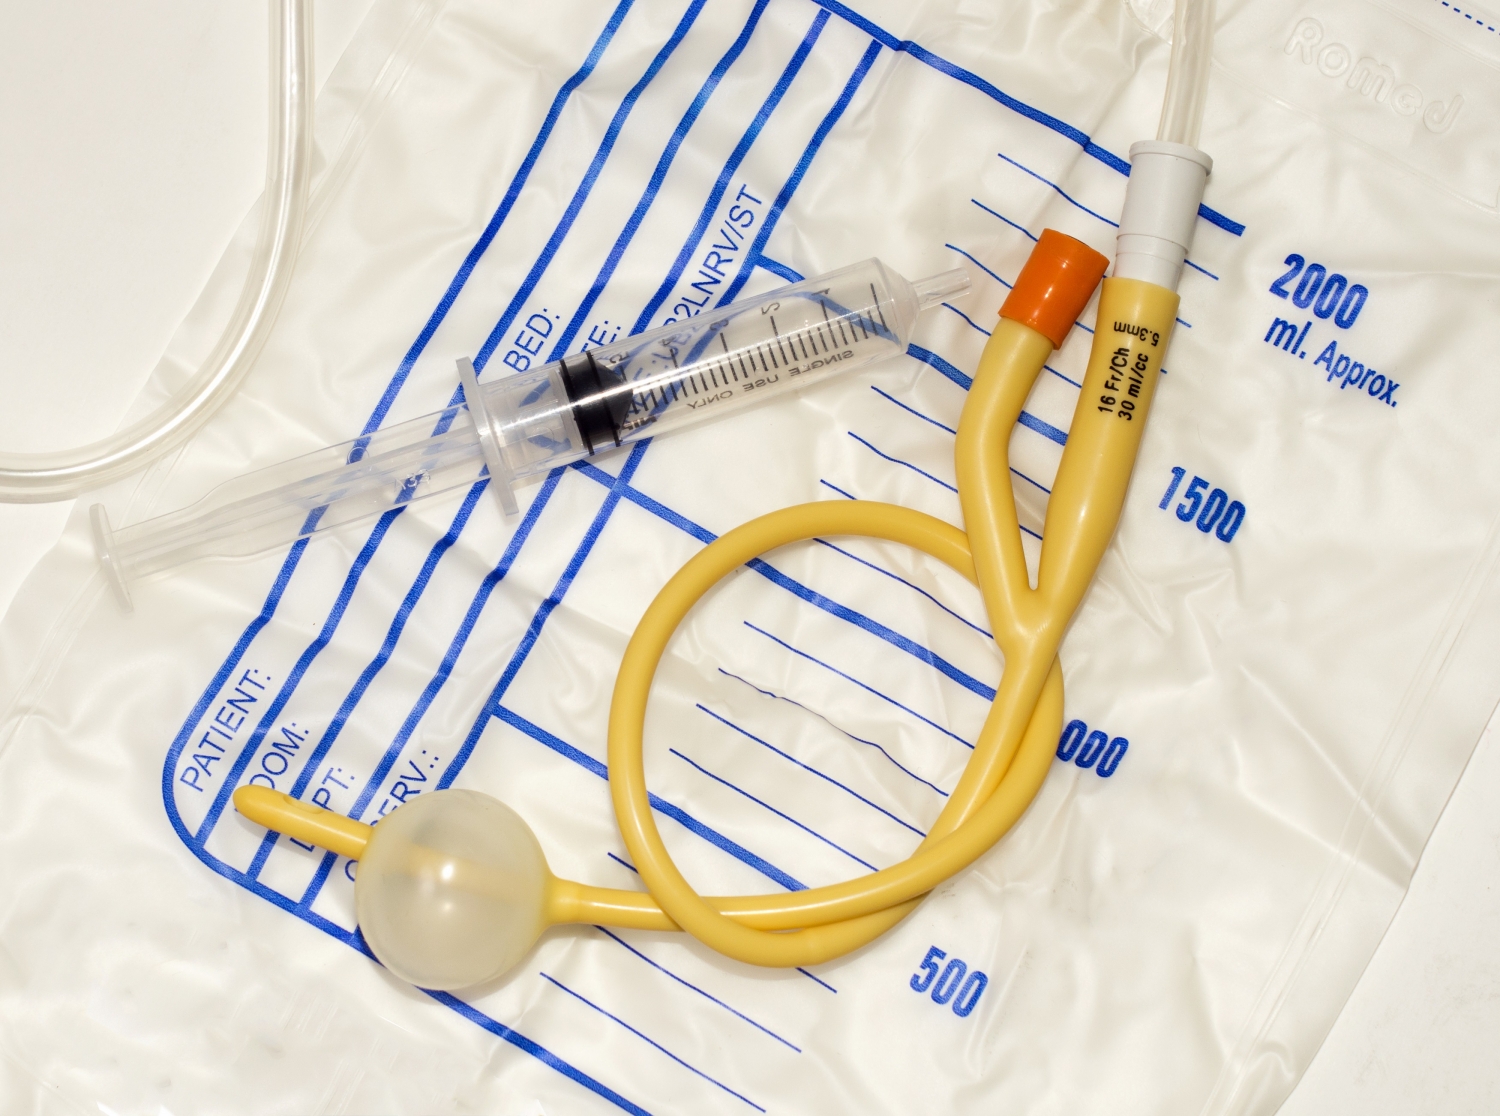 Urinary Catheter Care With Images Catheter Urinary Catheterization | My ...